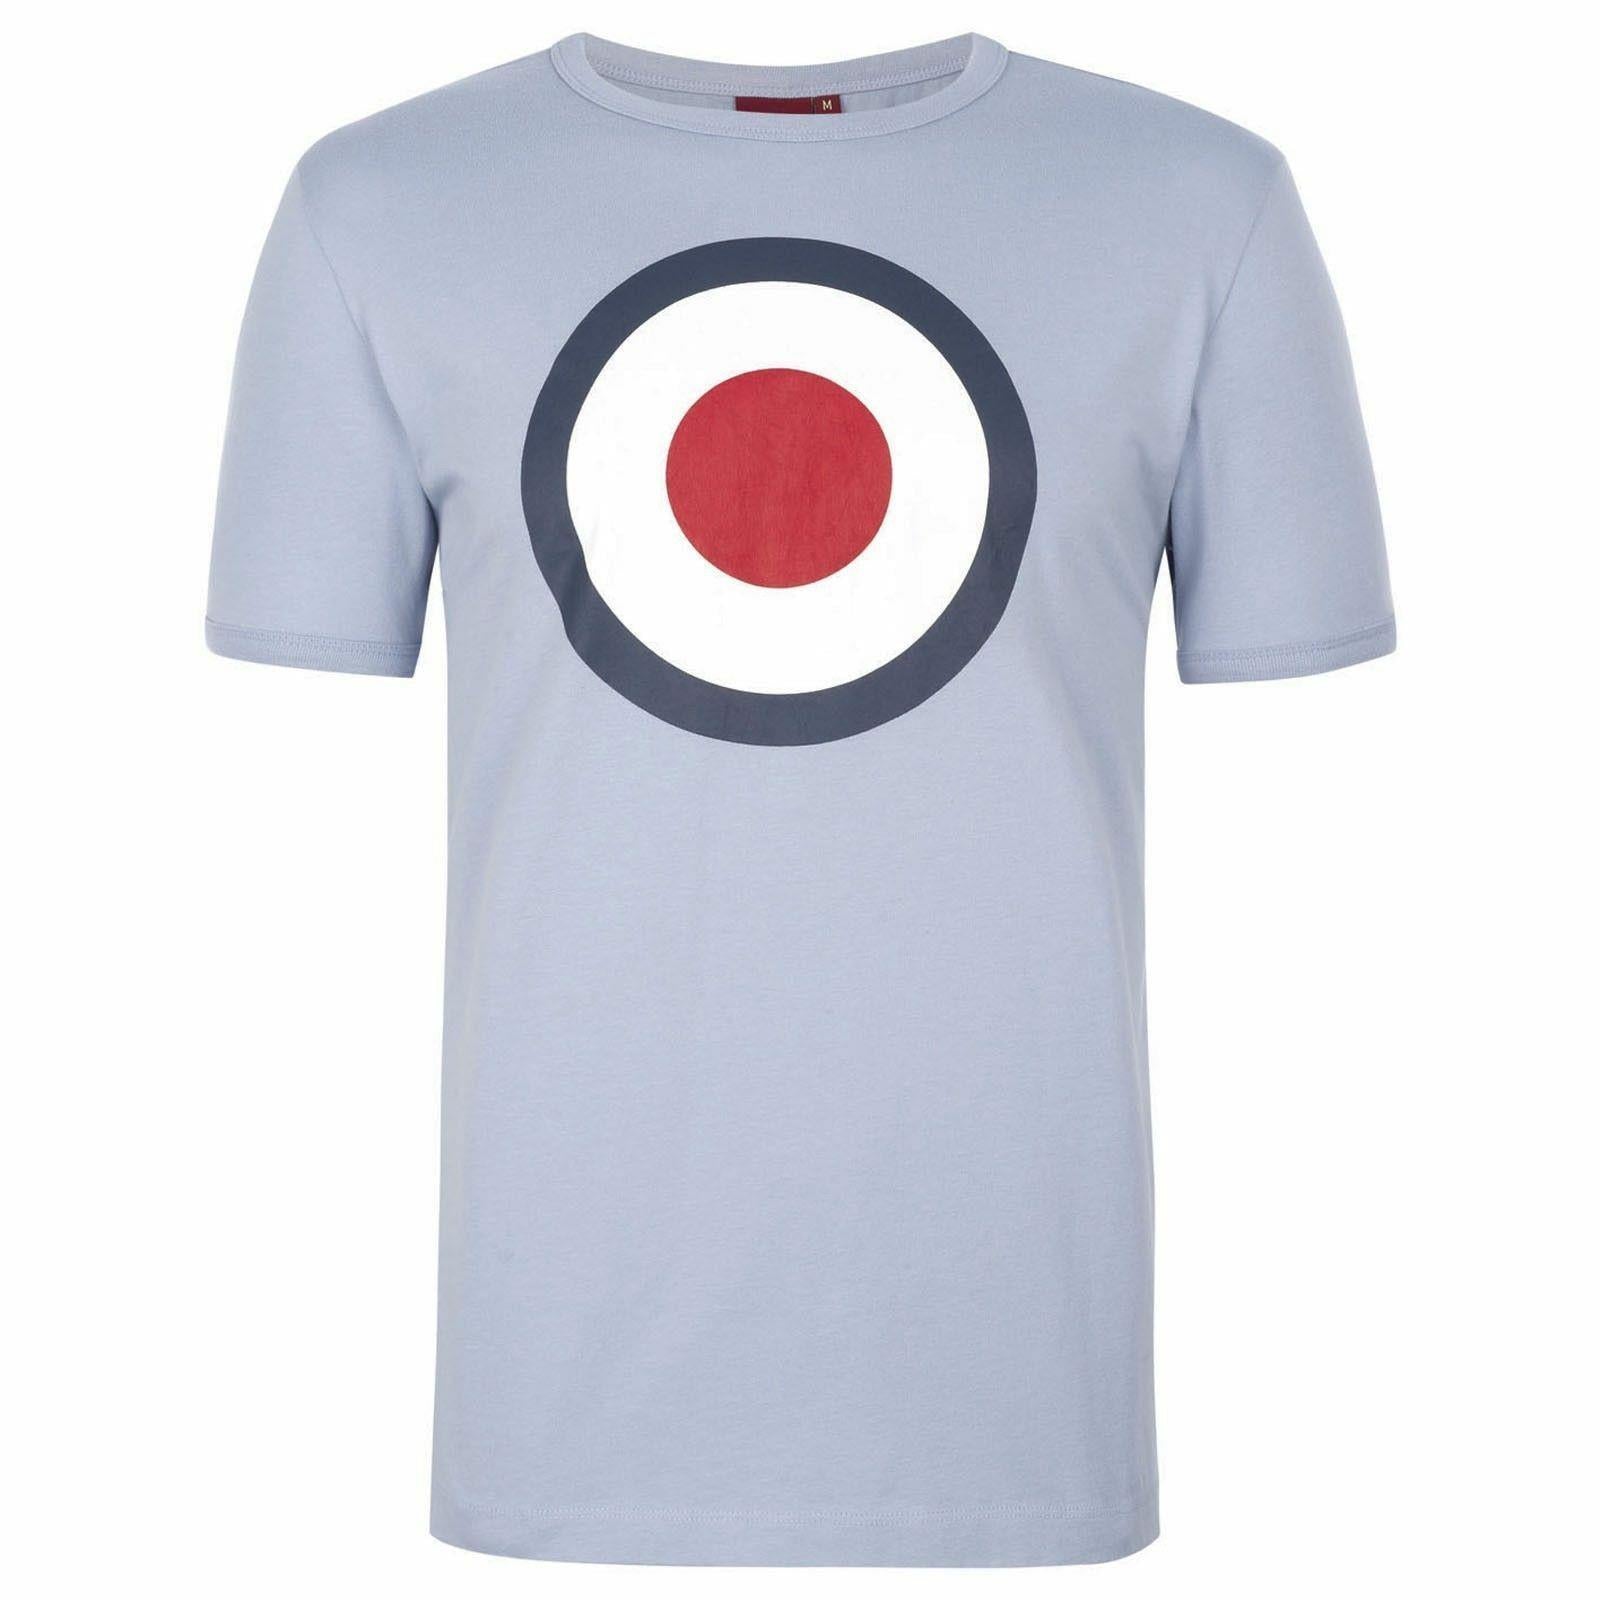 MERC Ticket dust blue 100% cotton short sleeve retro RAF roundel MoD T-shirt